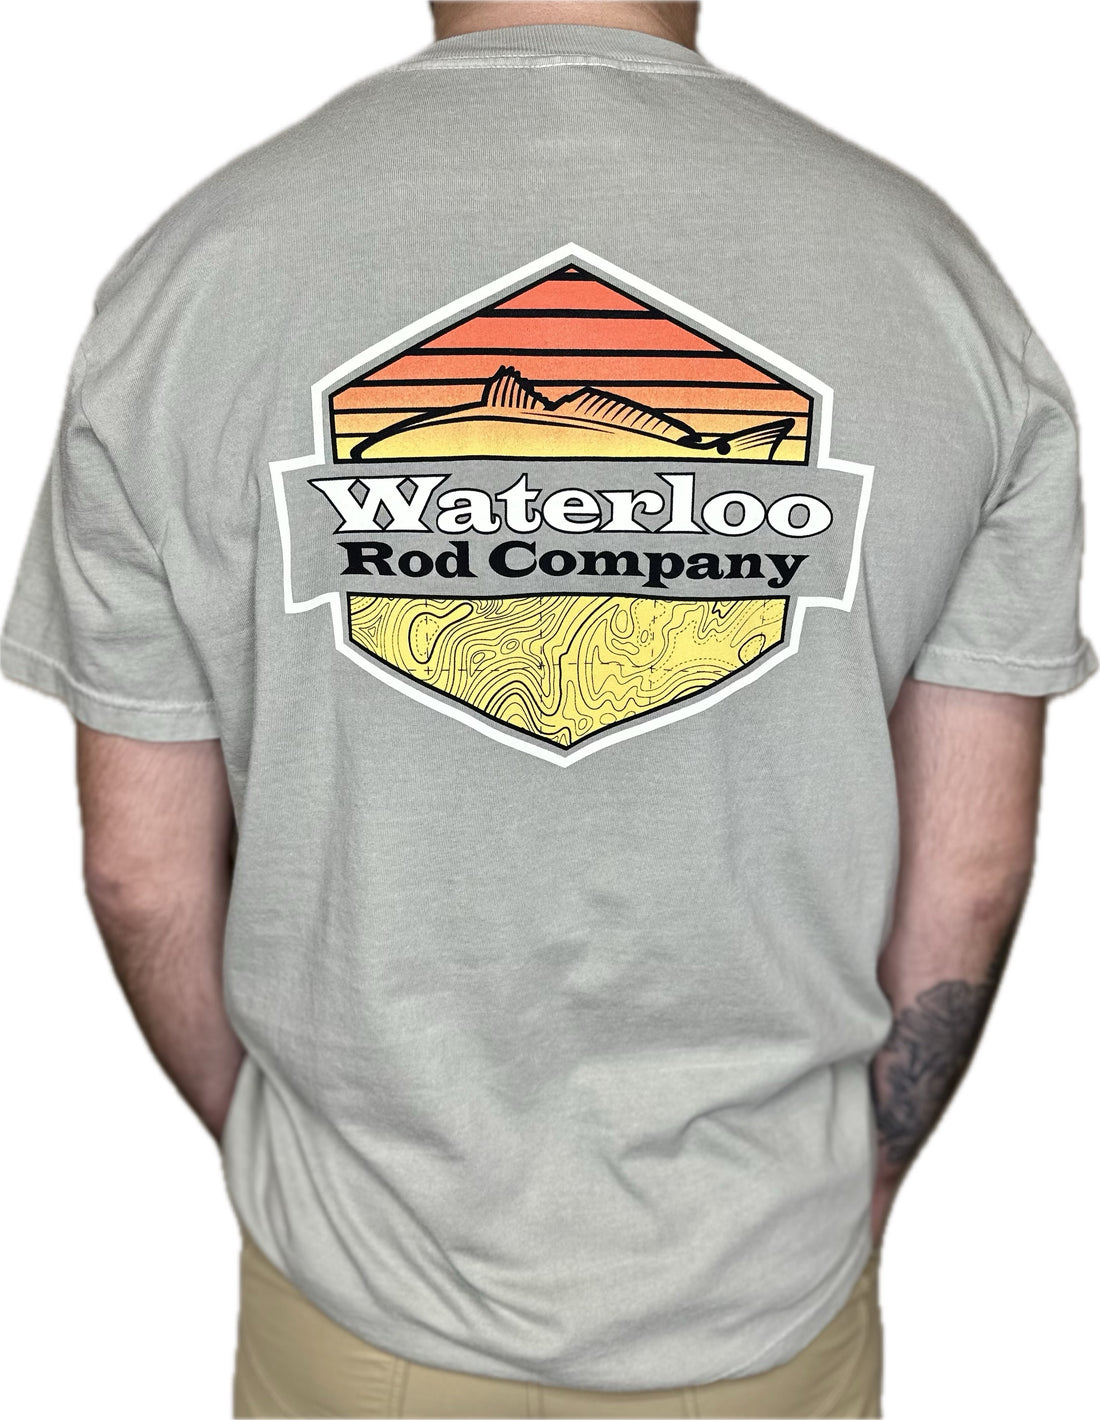 Waterloo Short Sleeve Cotton T-Shirt - Sandstone